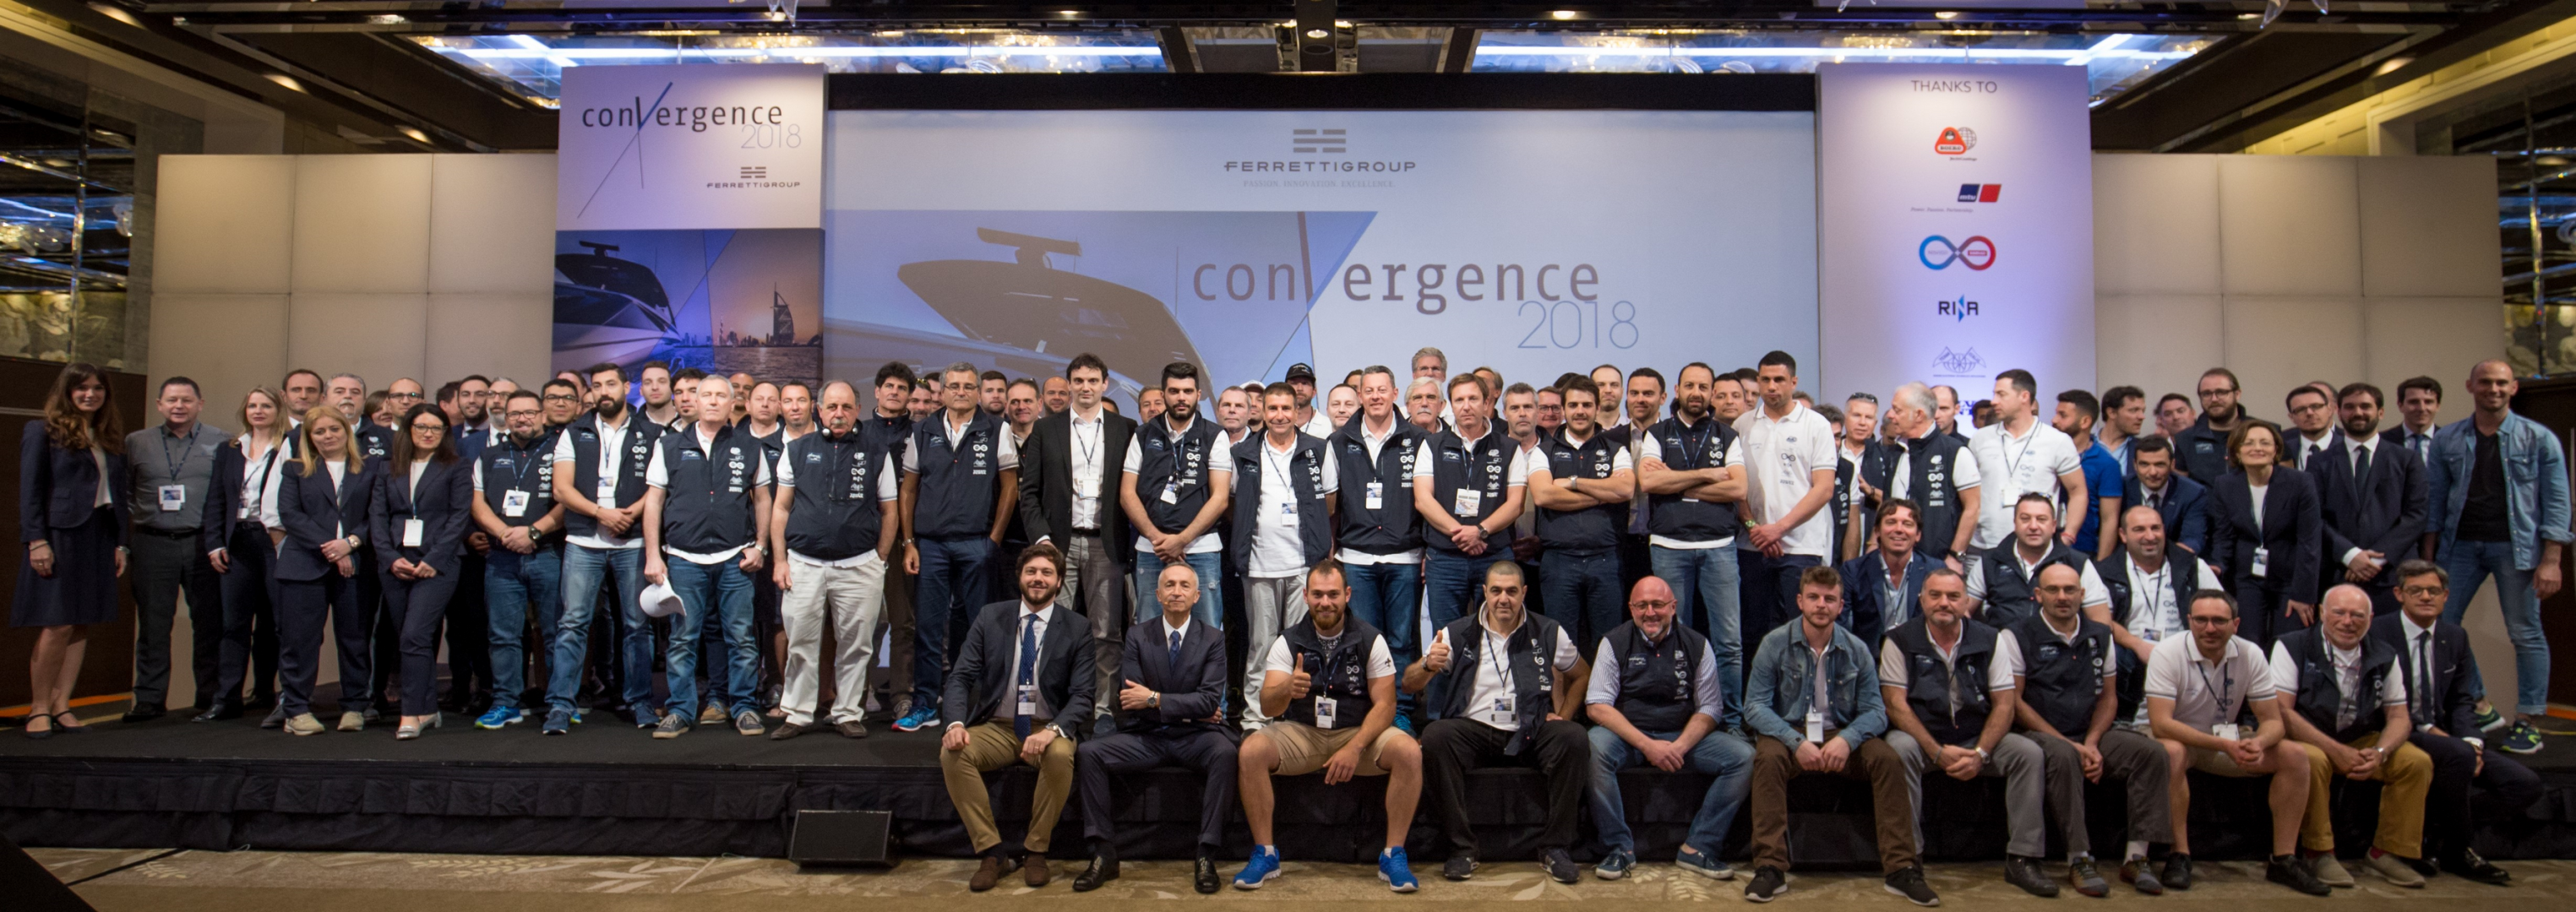 'Convergence” 2018, Ferretti Group's training days in Dubai